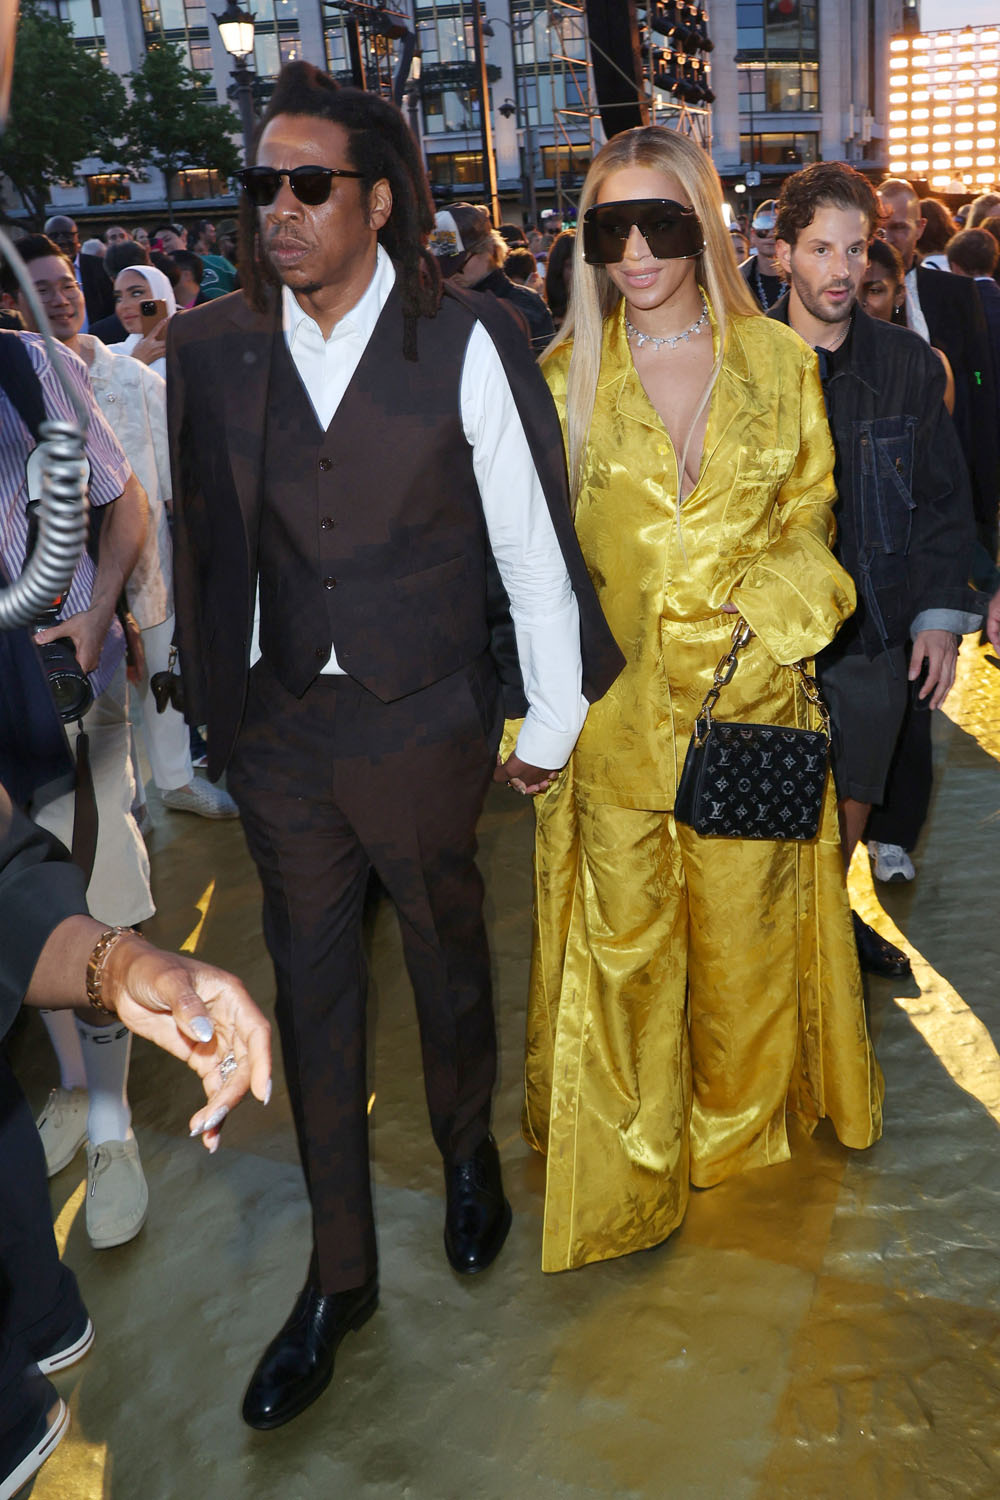 Black creatives, including Beyoncé, Rihanna, and Zendaya, were the big  story at Pharrell's Louis Vuitton show in Paris